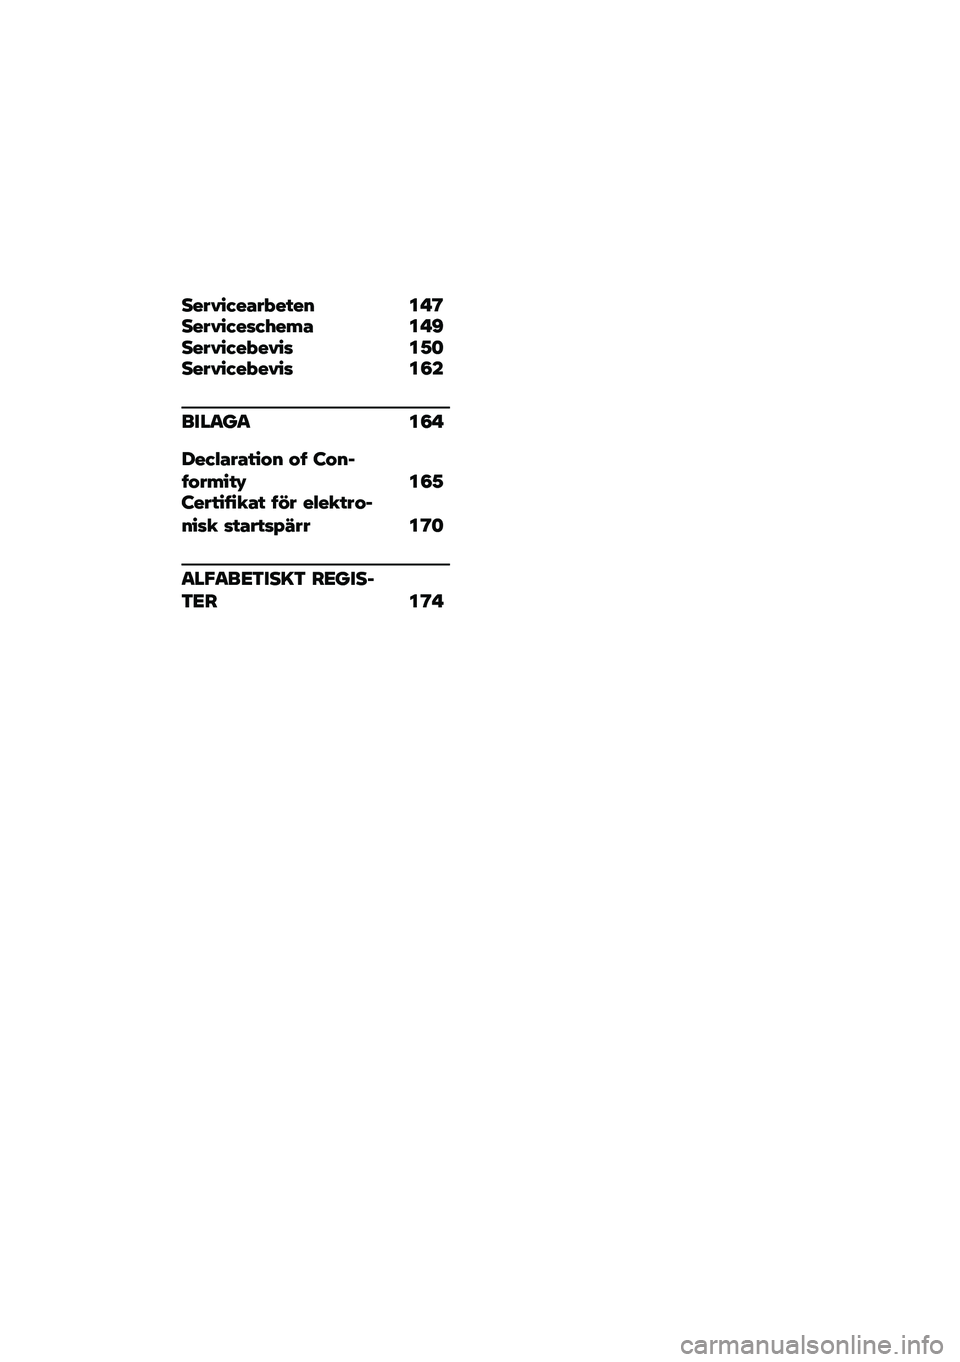 BMW MOTORRAD R NINE T SCRAMBLER 2021  Instruktionsbok (in Swedish) ������(����-����% �� �@������(���(�)��+� �� �C������(��-���� ��1�	������(��-���� ��8�
����
��
 ��8� 
���(�.������$�% �$�6 �:�$�%�,�6�$��+���